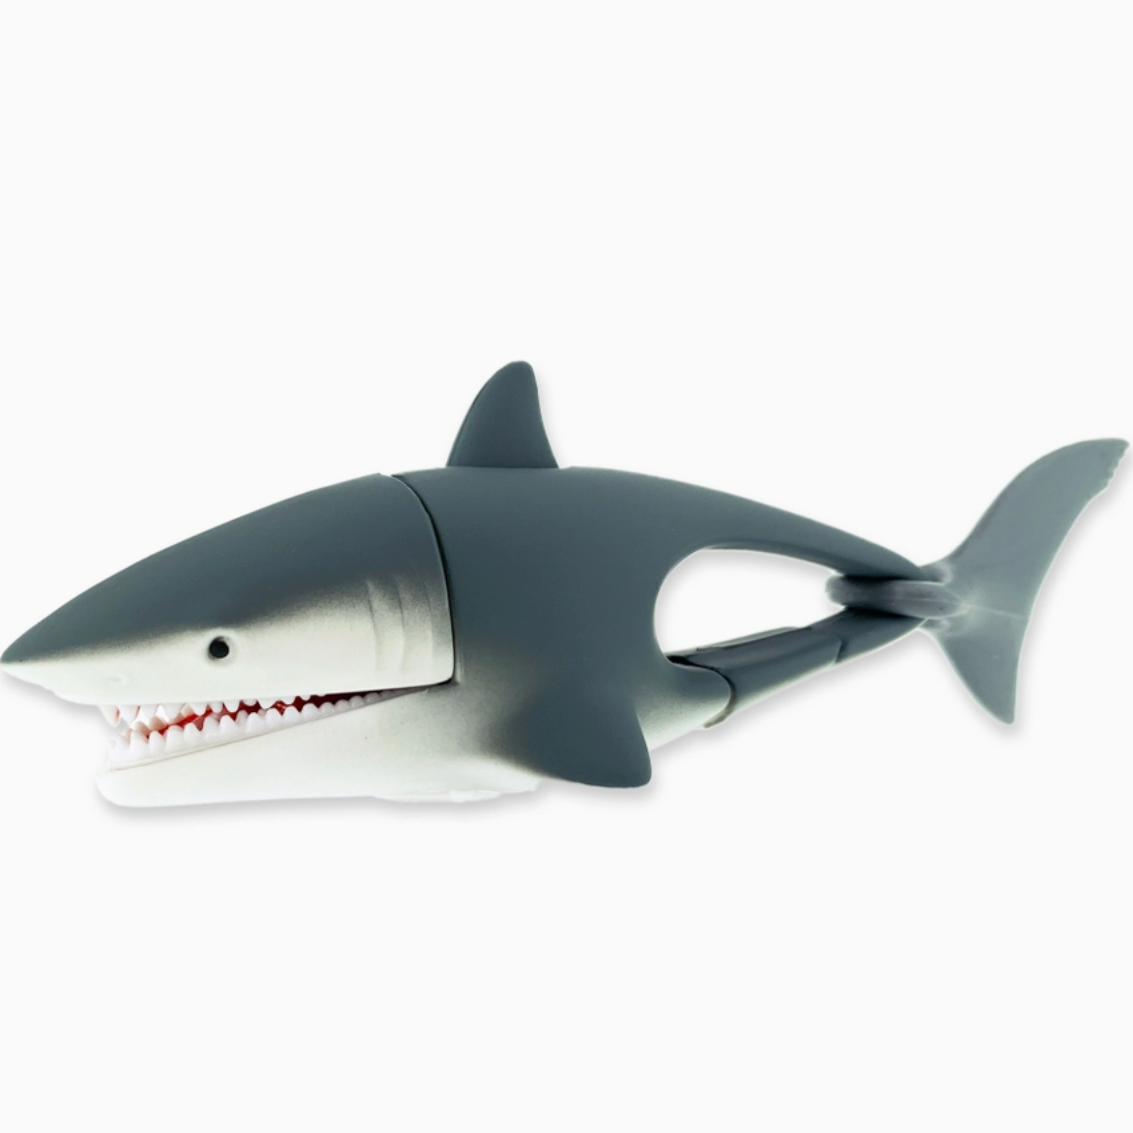 Lifelight Animal Carabiner Flashlight - Shark